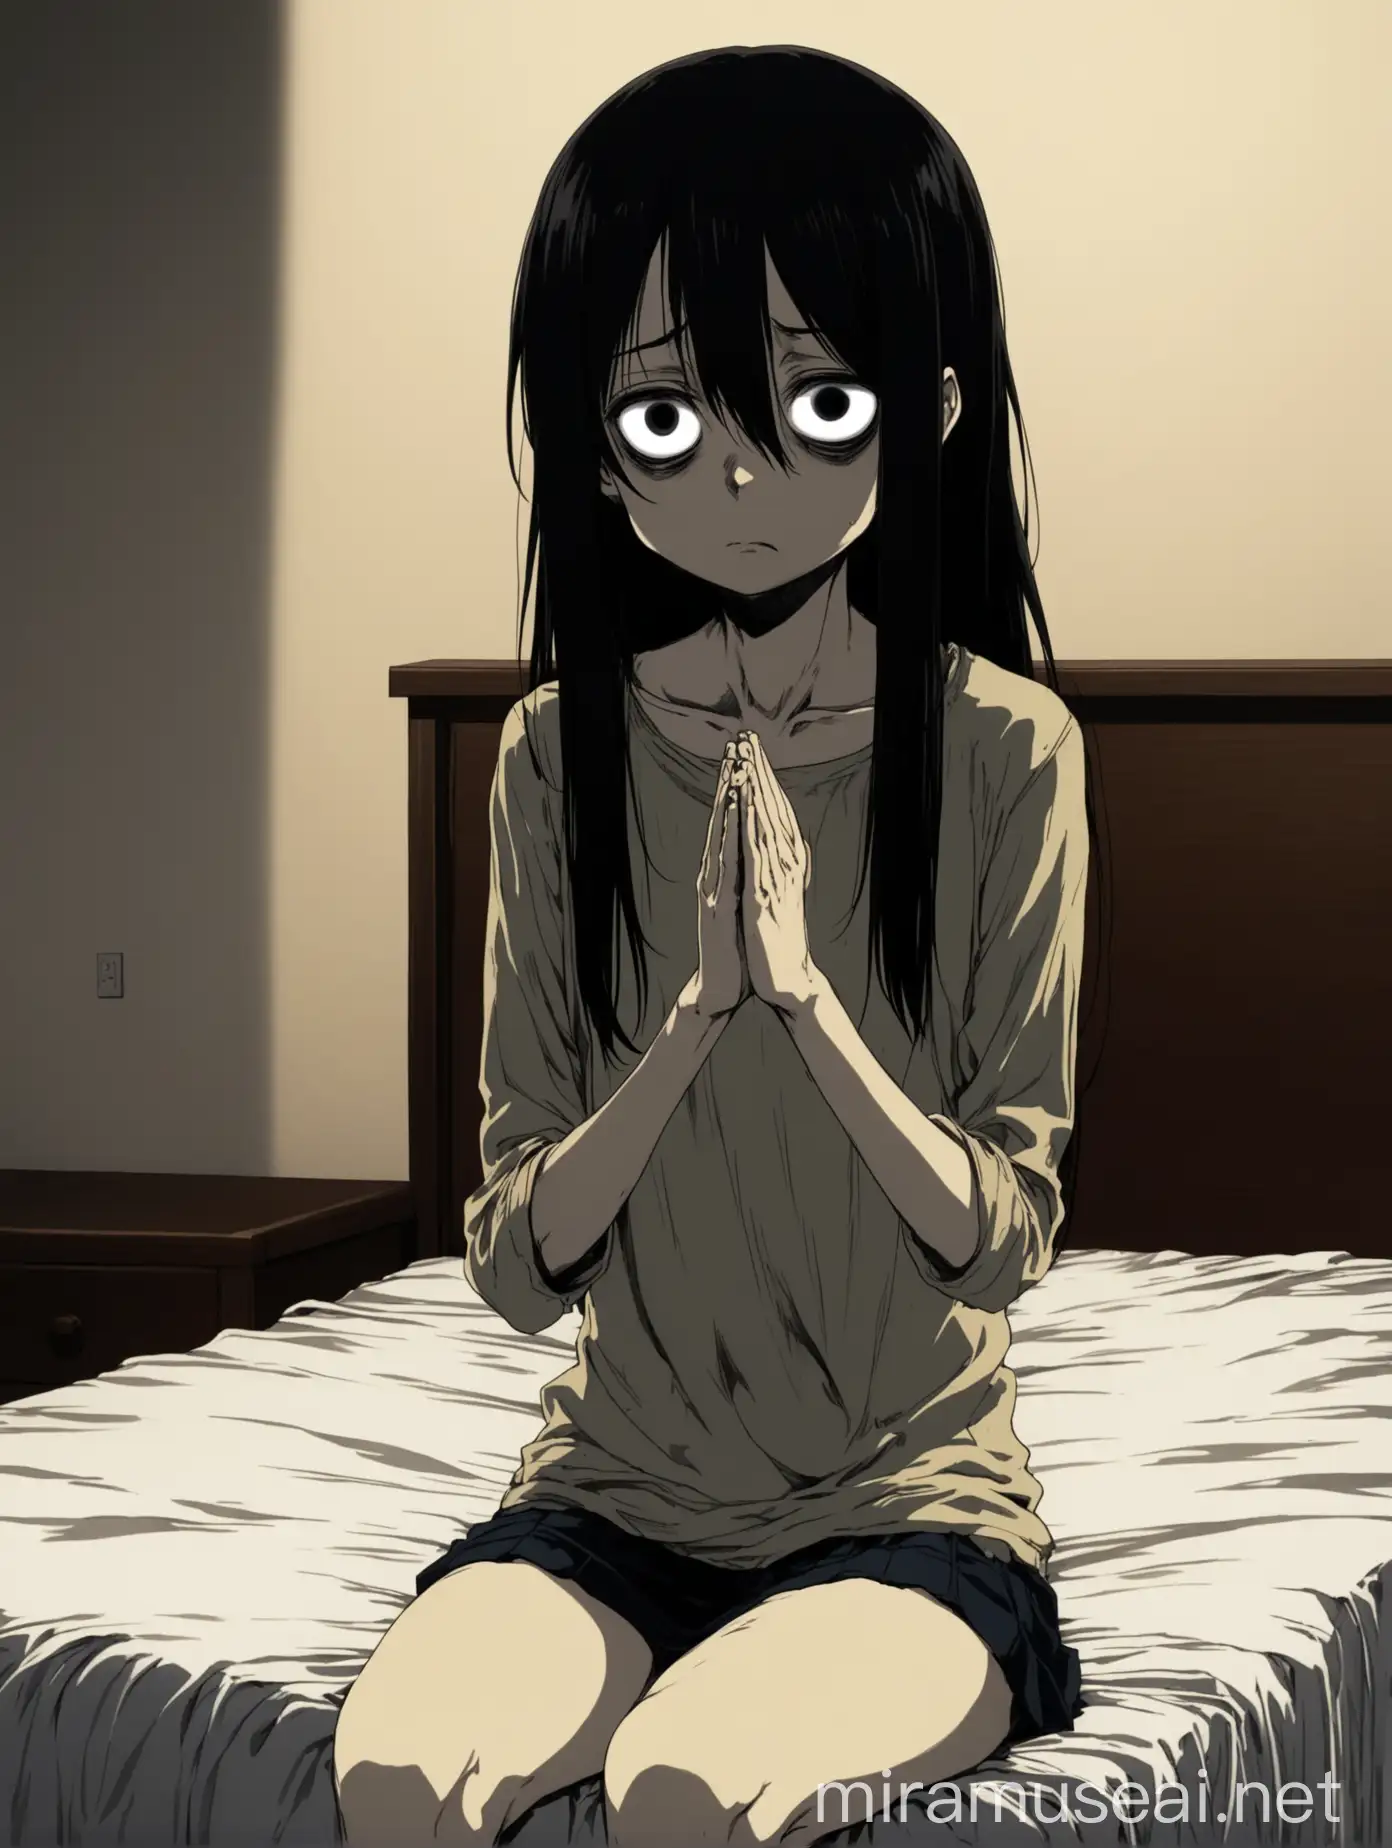 Anime girl in her 20-es, begging, skinny, unkempt long black hair, bags under eyes, plaintive face, sitting on bed, room on background